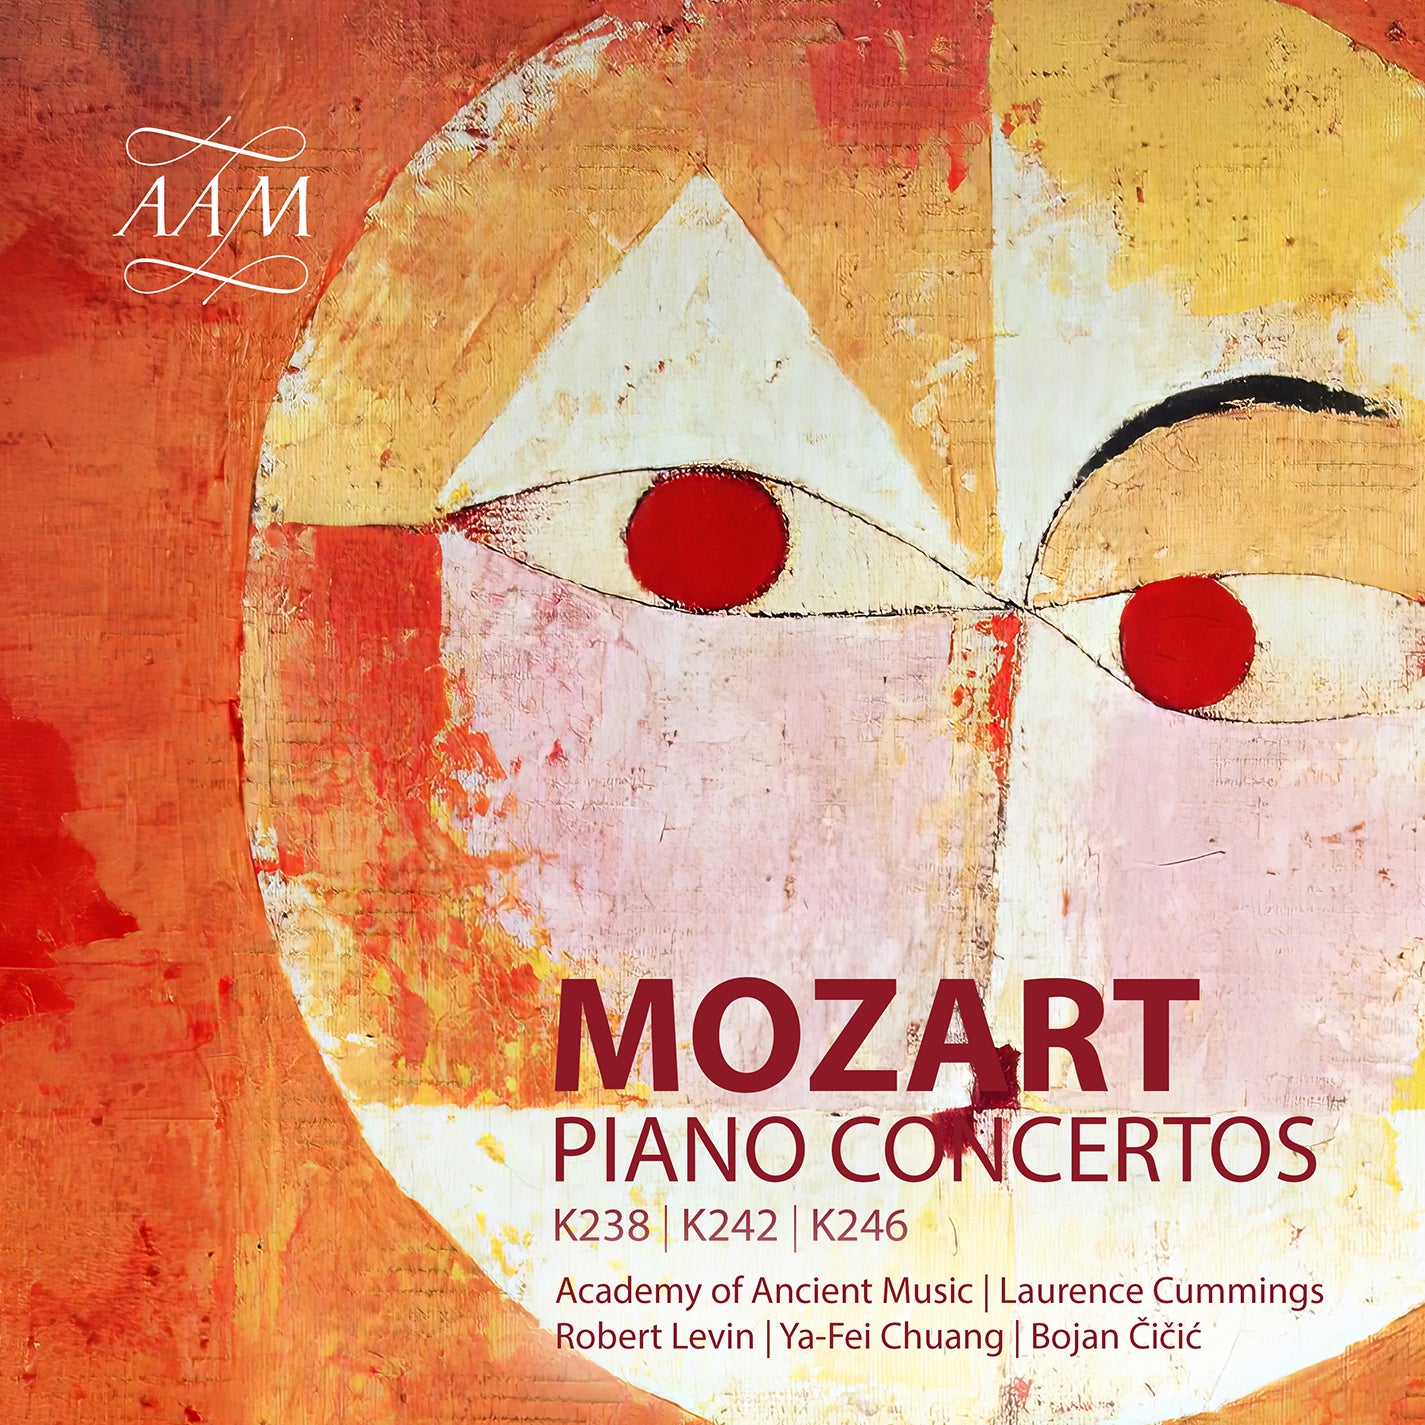 Mozart: Piano Concertos Nos. 6-8 / Cummings, Levin, Academy of Ancient Music